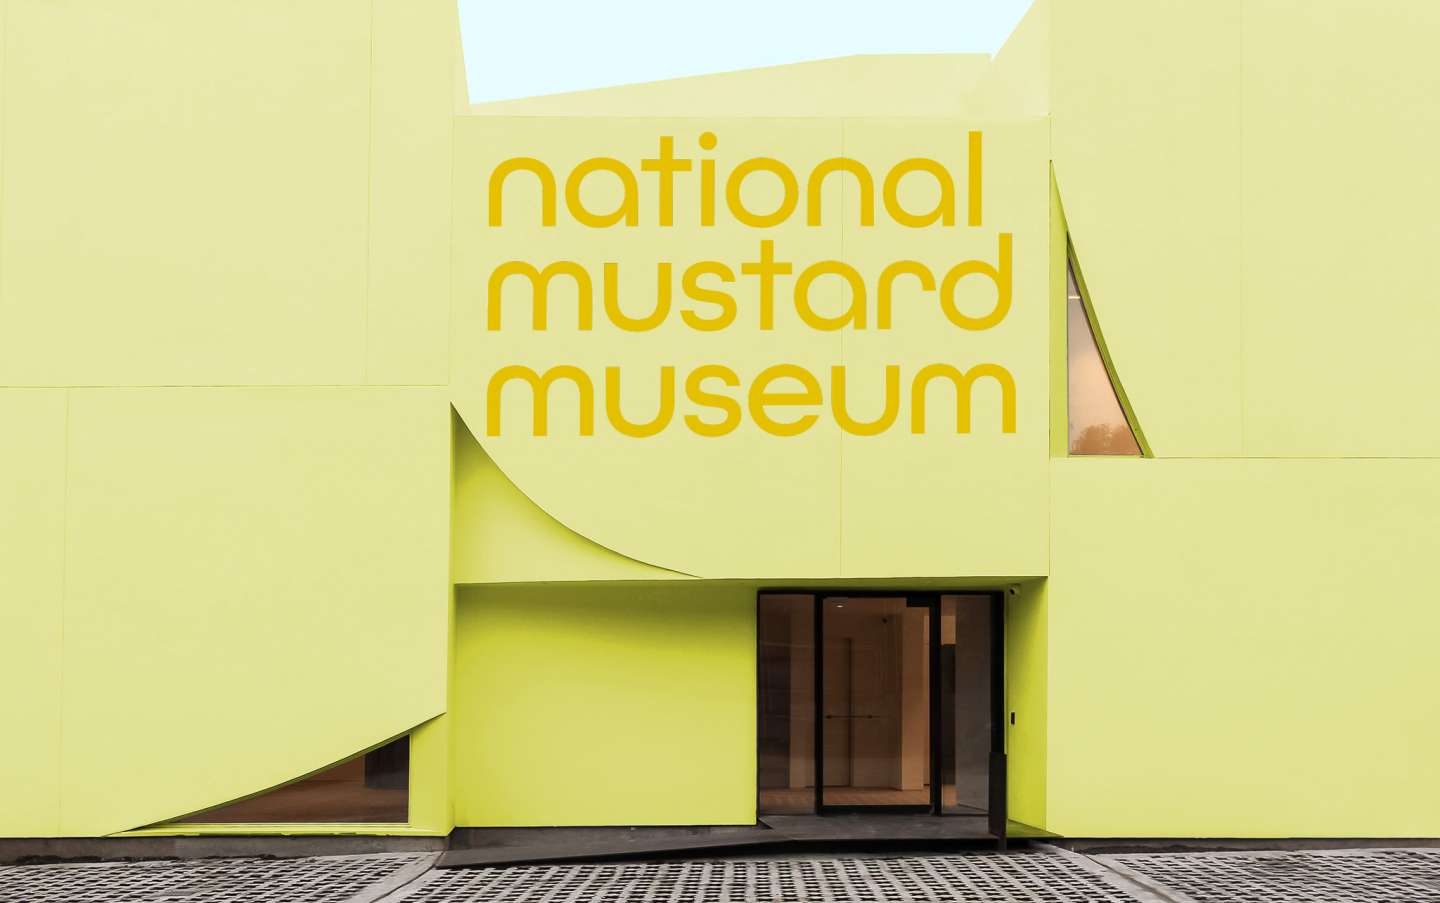 NATIONAL MUSTARD MUSEUM